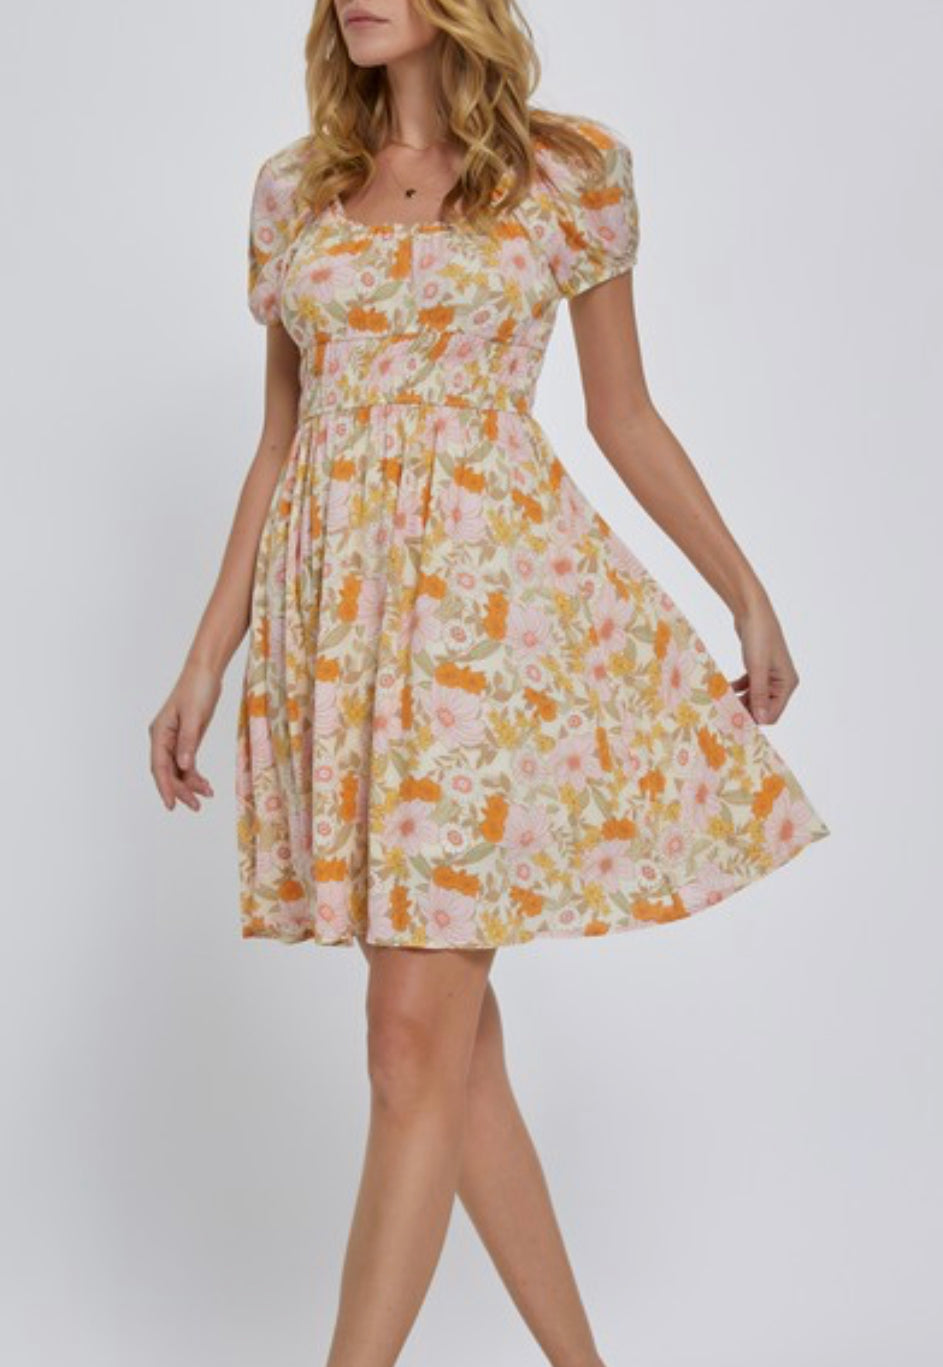 Buy she18 Backless Orange Floral Print Short Dress L at Amazon.in